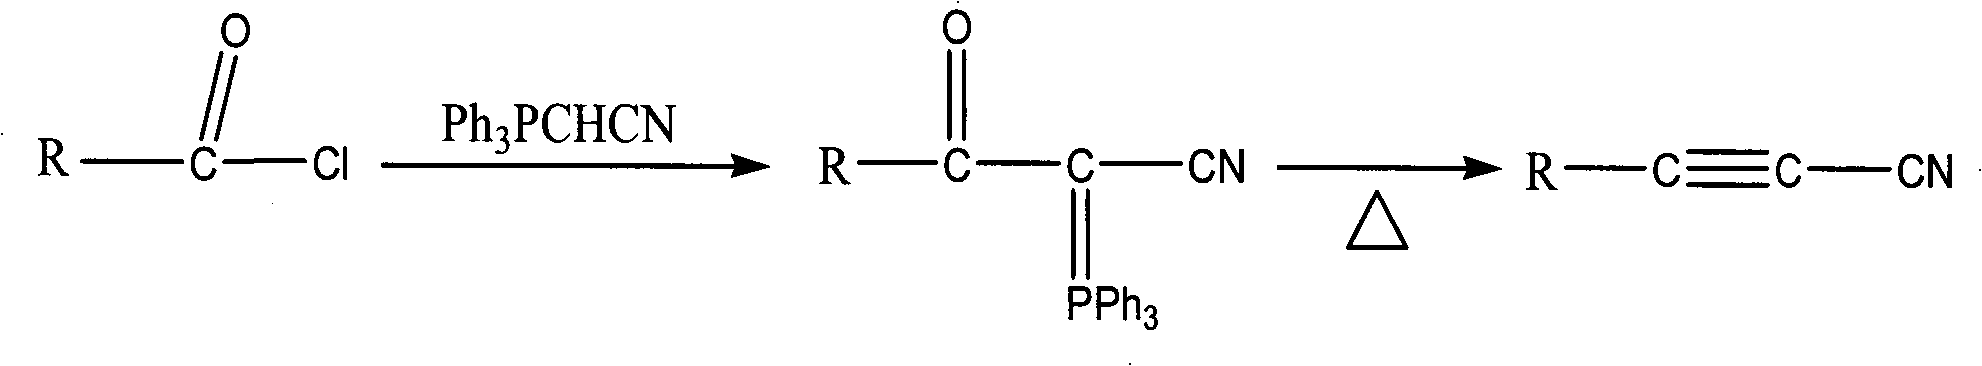 Method for synthesizing cyanoacetylene derivatives